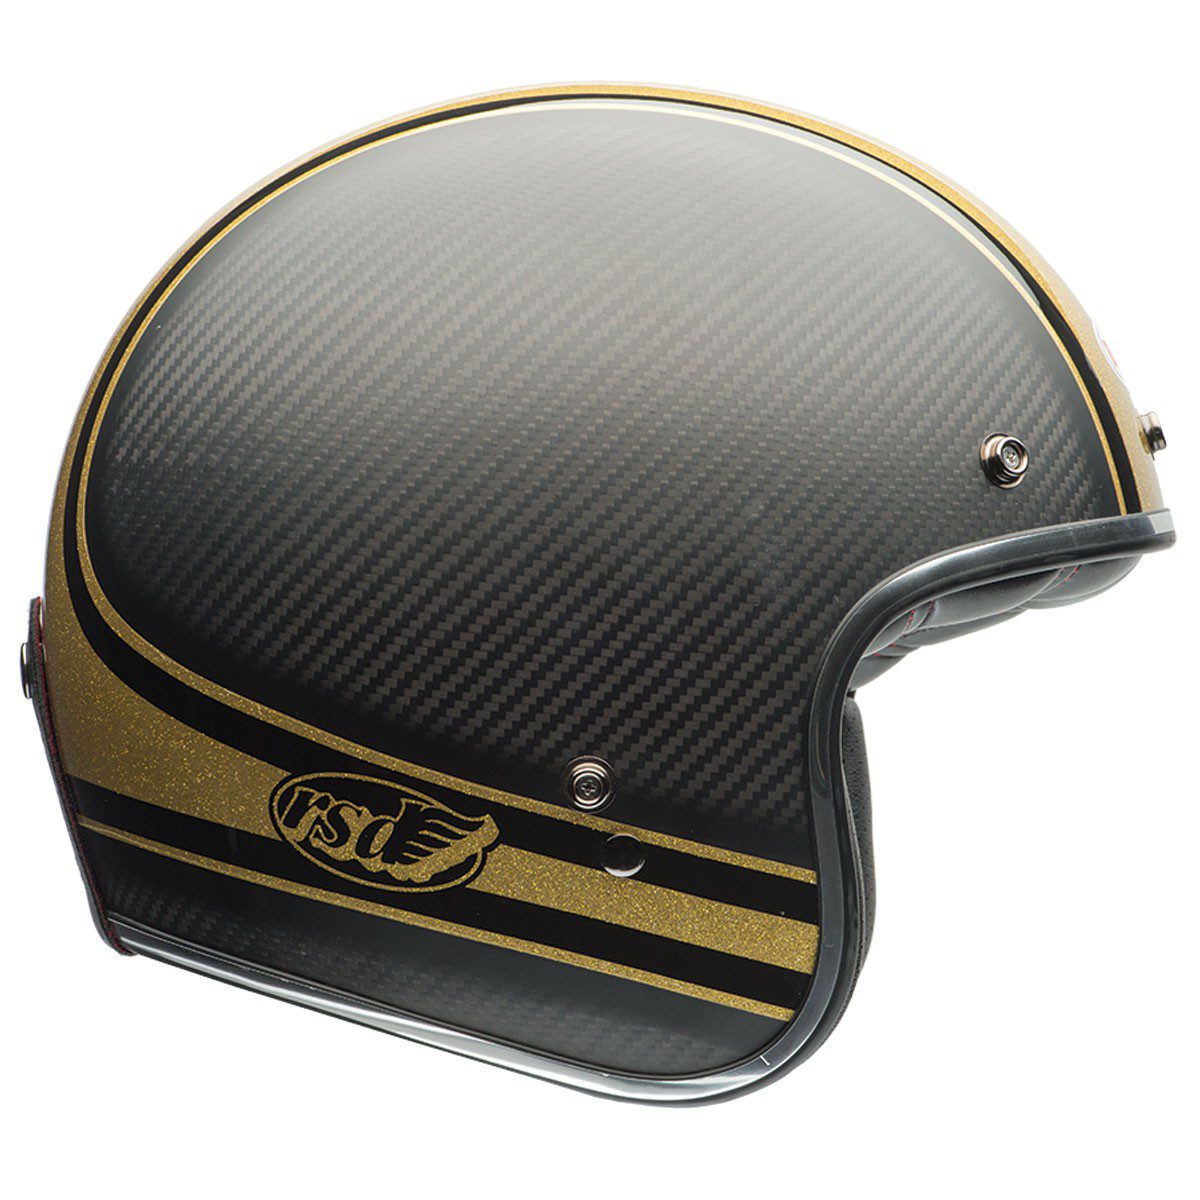 Bell Custom 500 Carbon Helmet